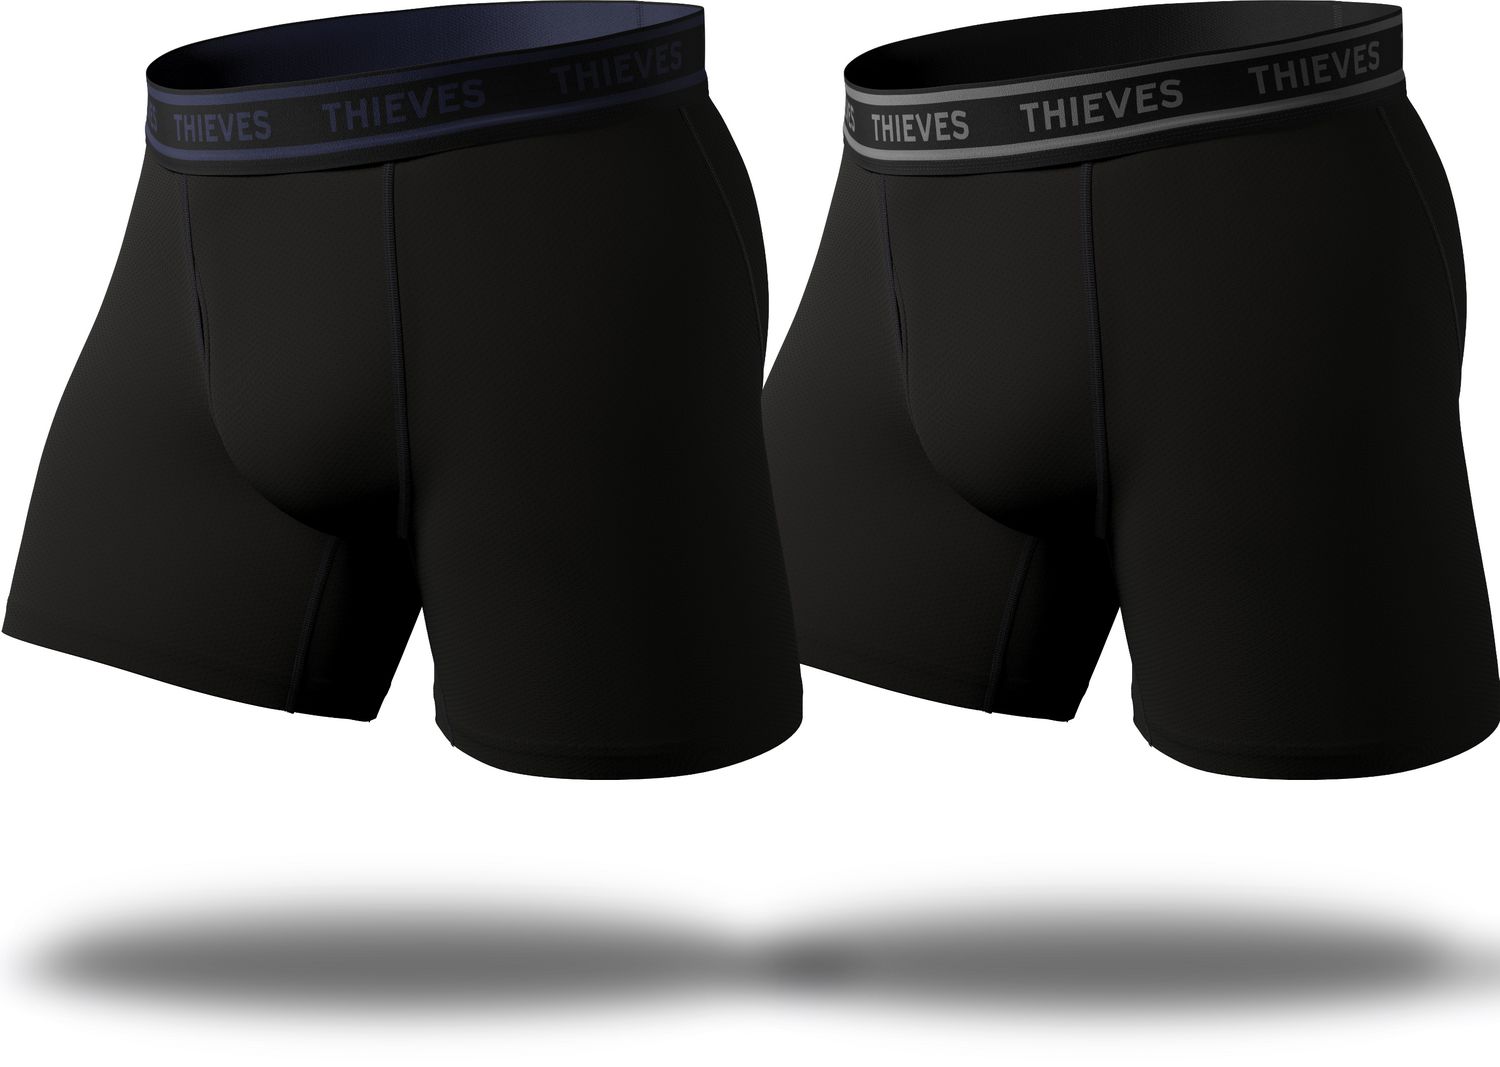 Pack of 2 (Medium Underwear){ 1 x Skin + 1 x Black} - 100% Comfy